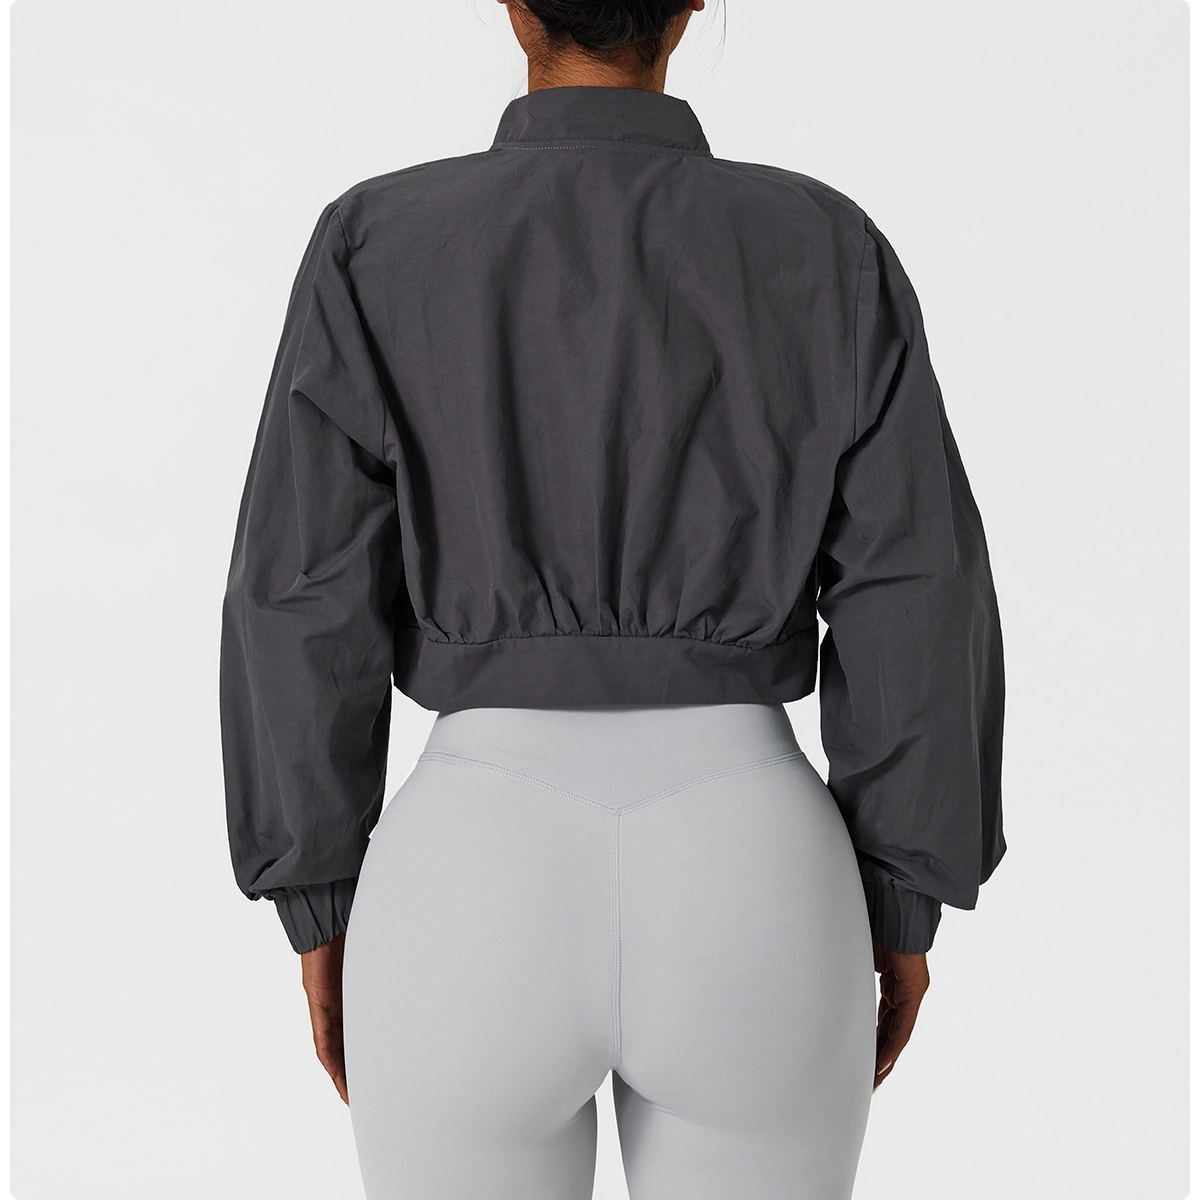 Amazon Hot Sale Sports Jacket Outdoor Running Quick Drying Yoga Coat